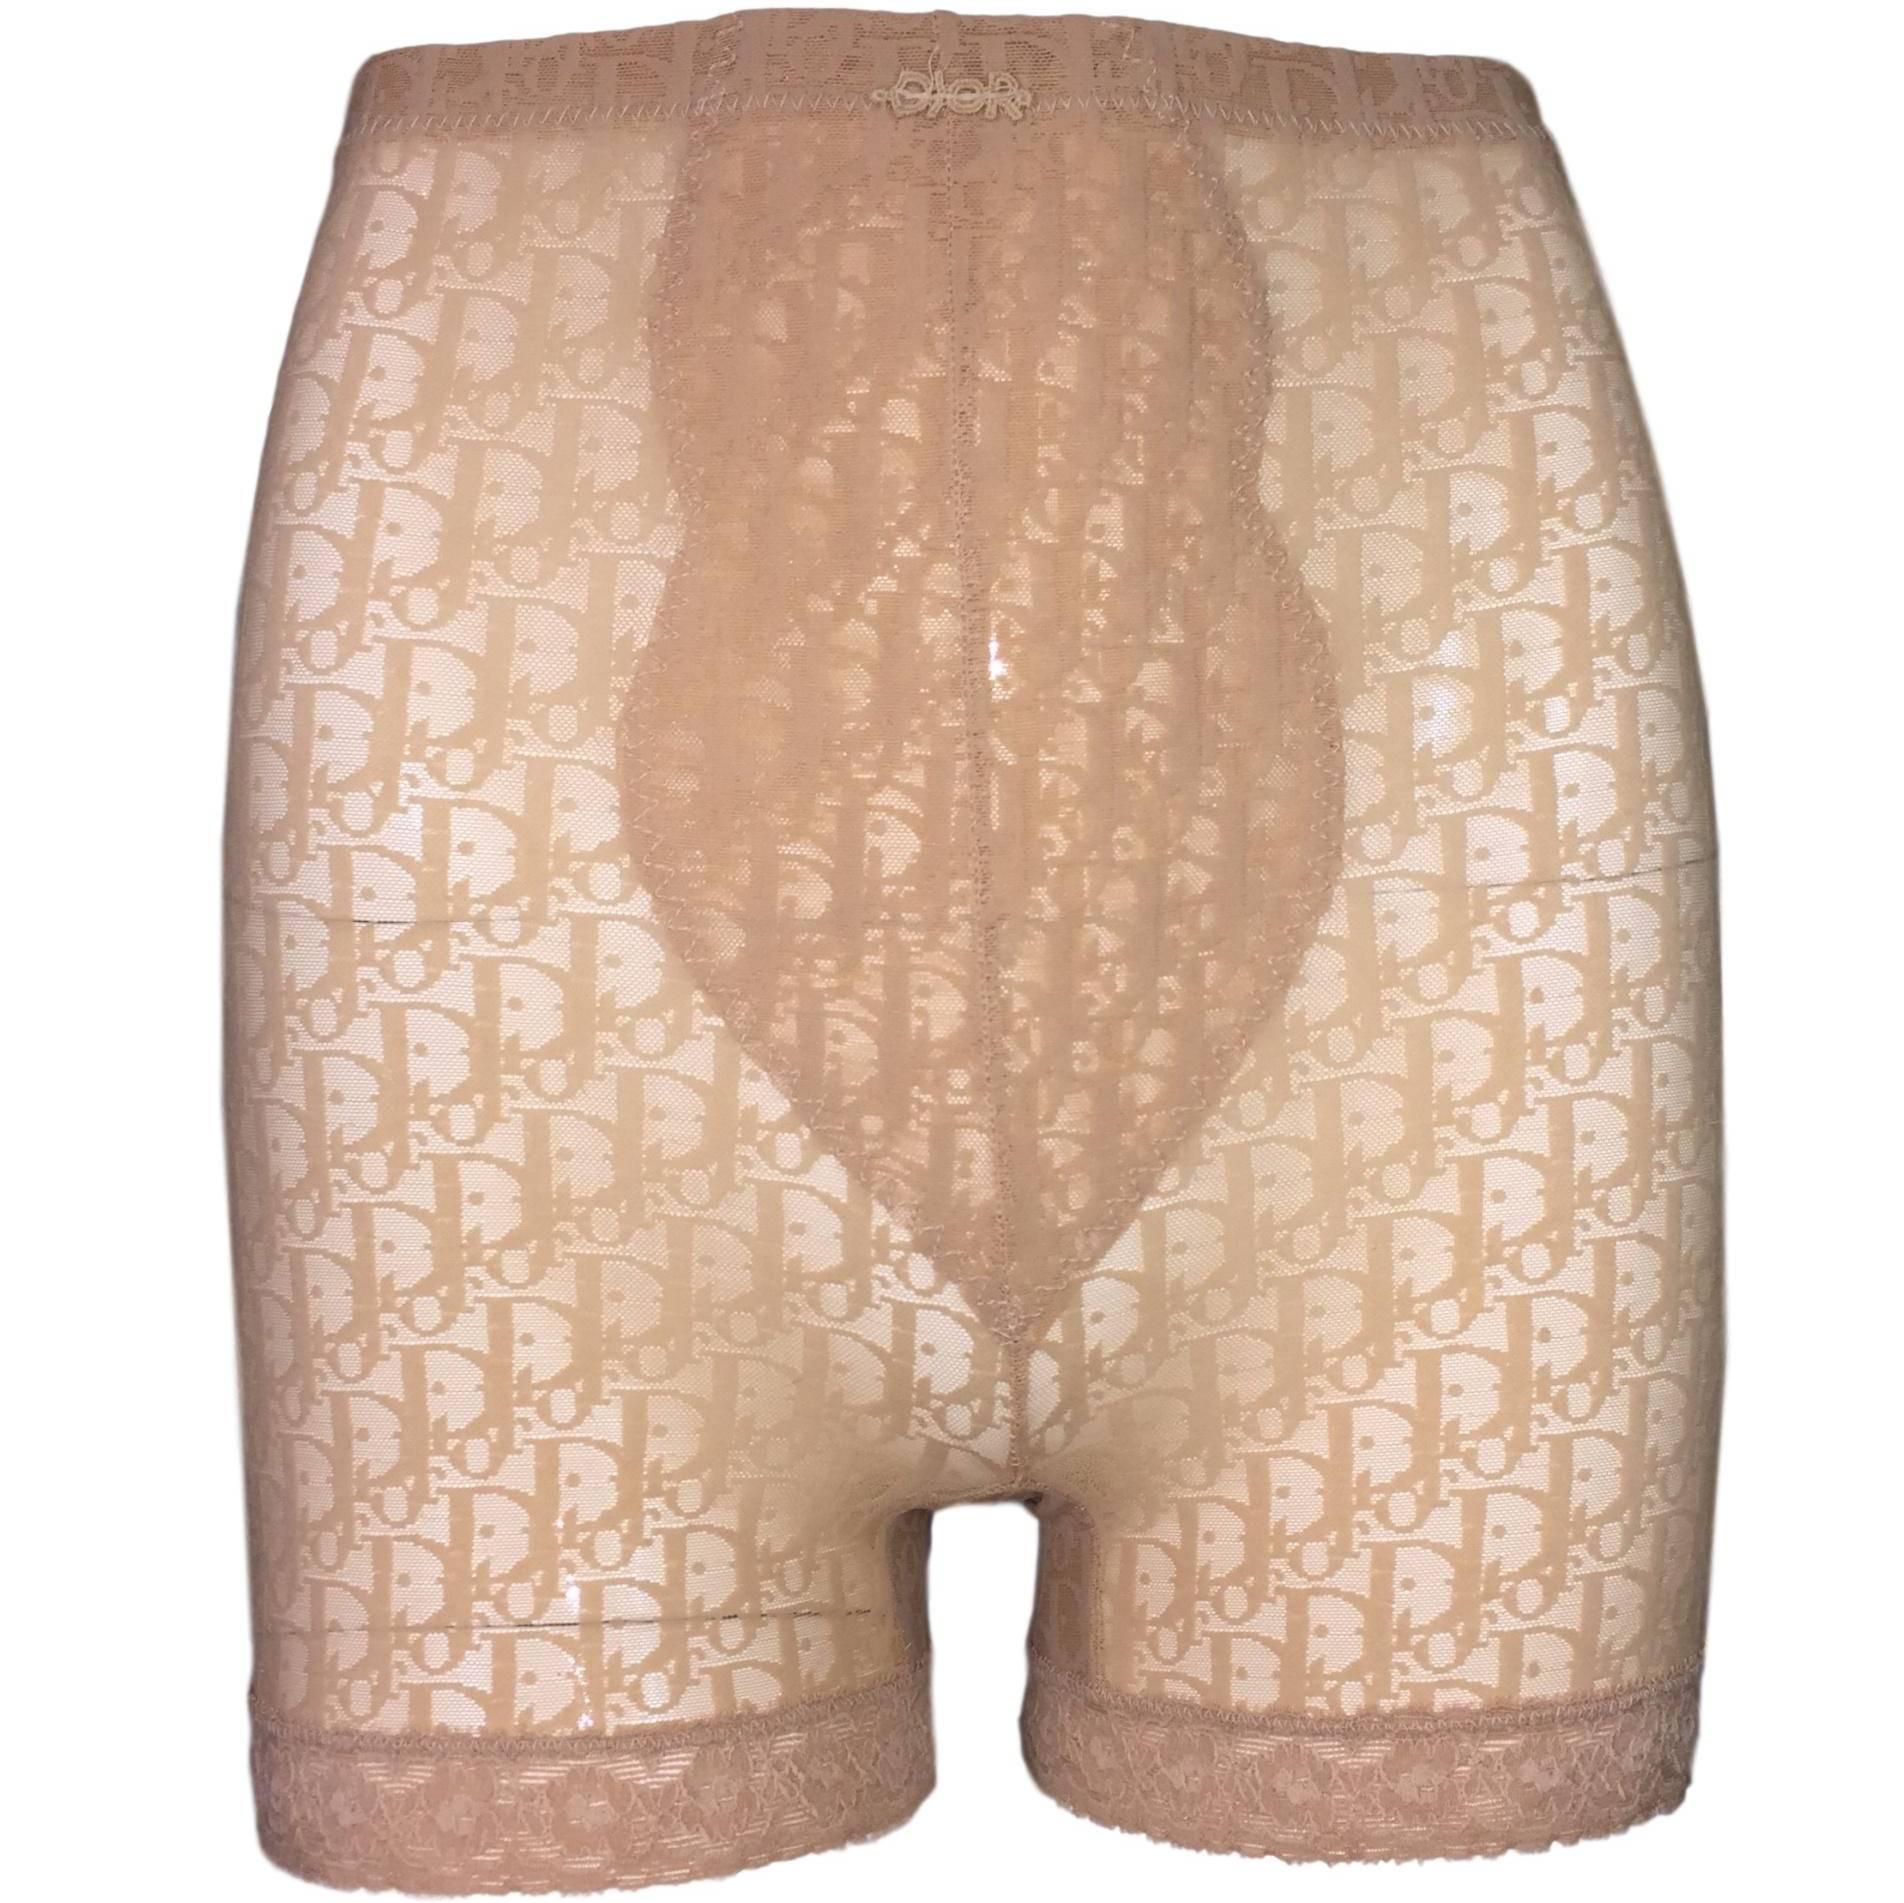 1990s Christian Dior Pin-Up Sheer Nude Monogram Mesh and Lace High Waist Shorts